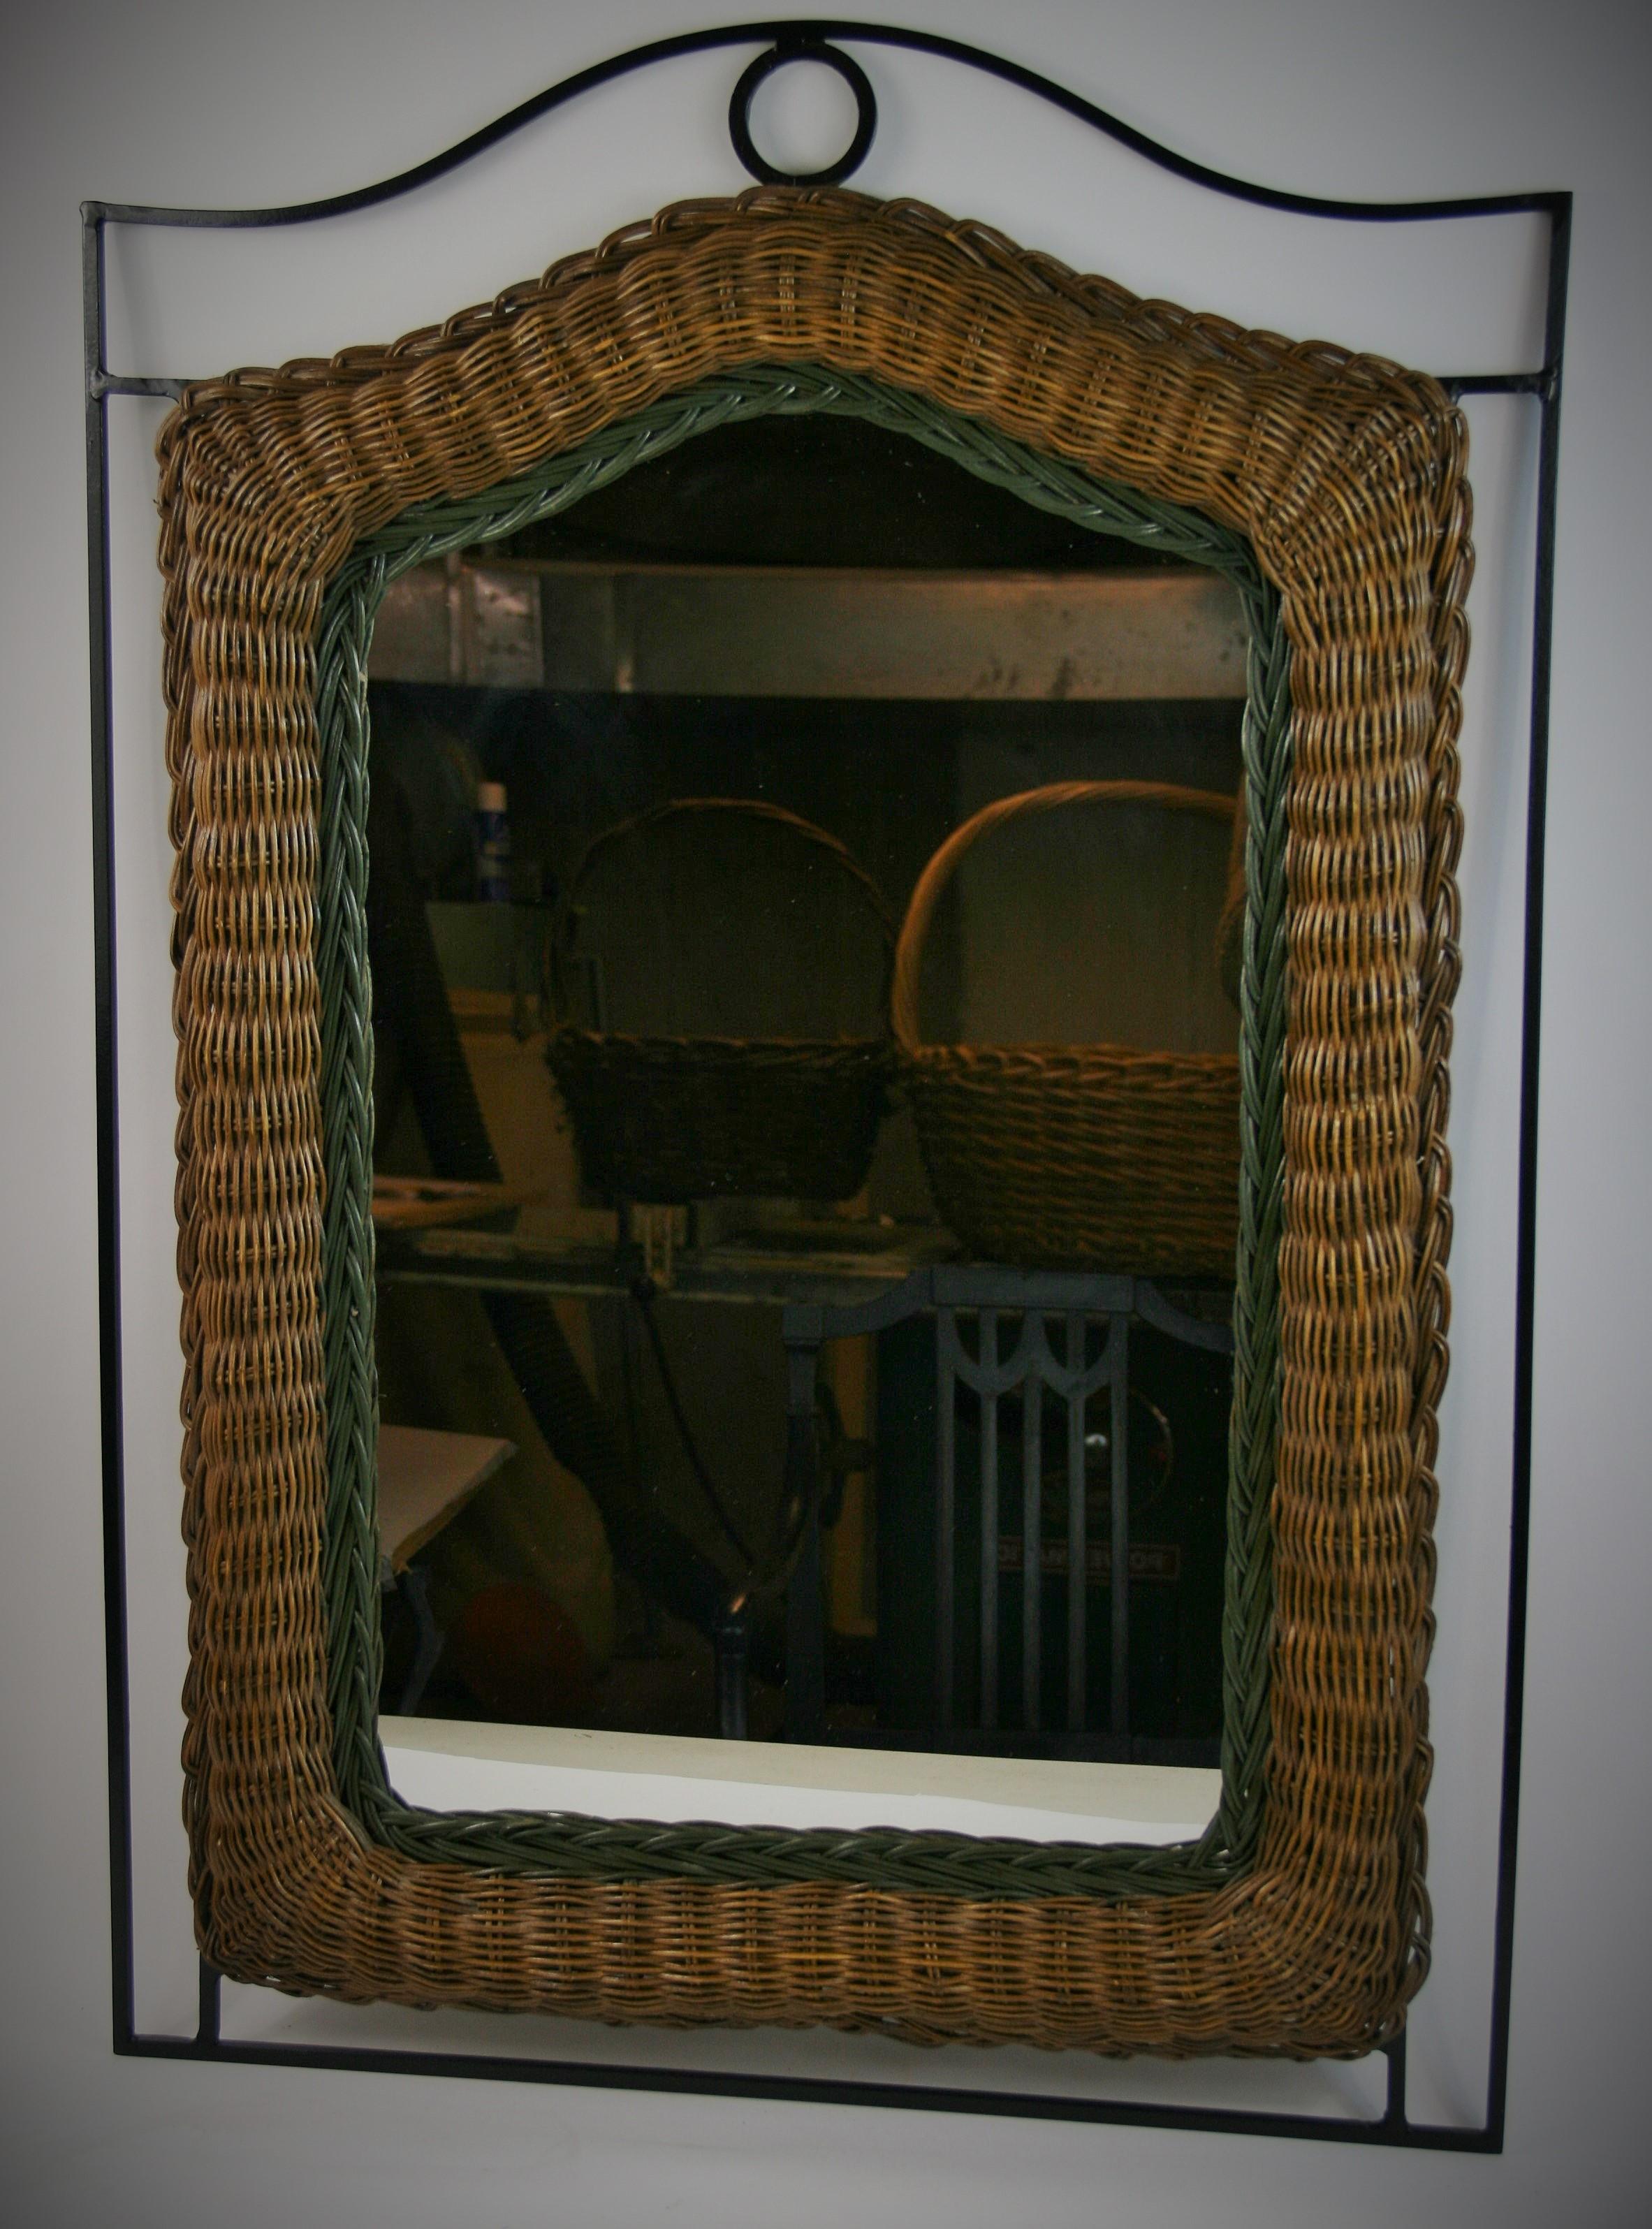 2-300 wicker mirror surrounded by handmade black iron border.
Dark wicker with dark green border around the mirror.